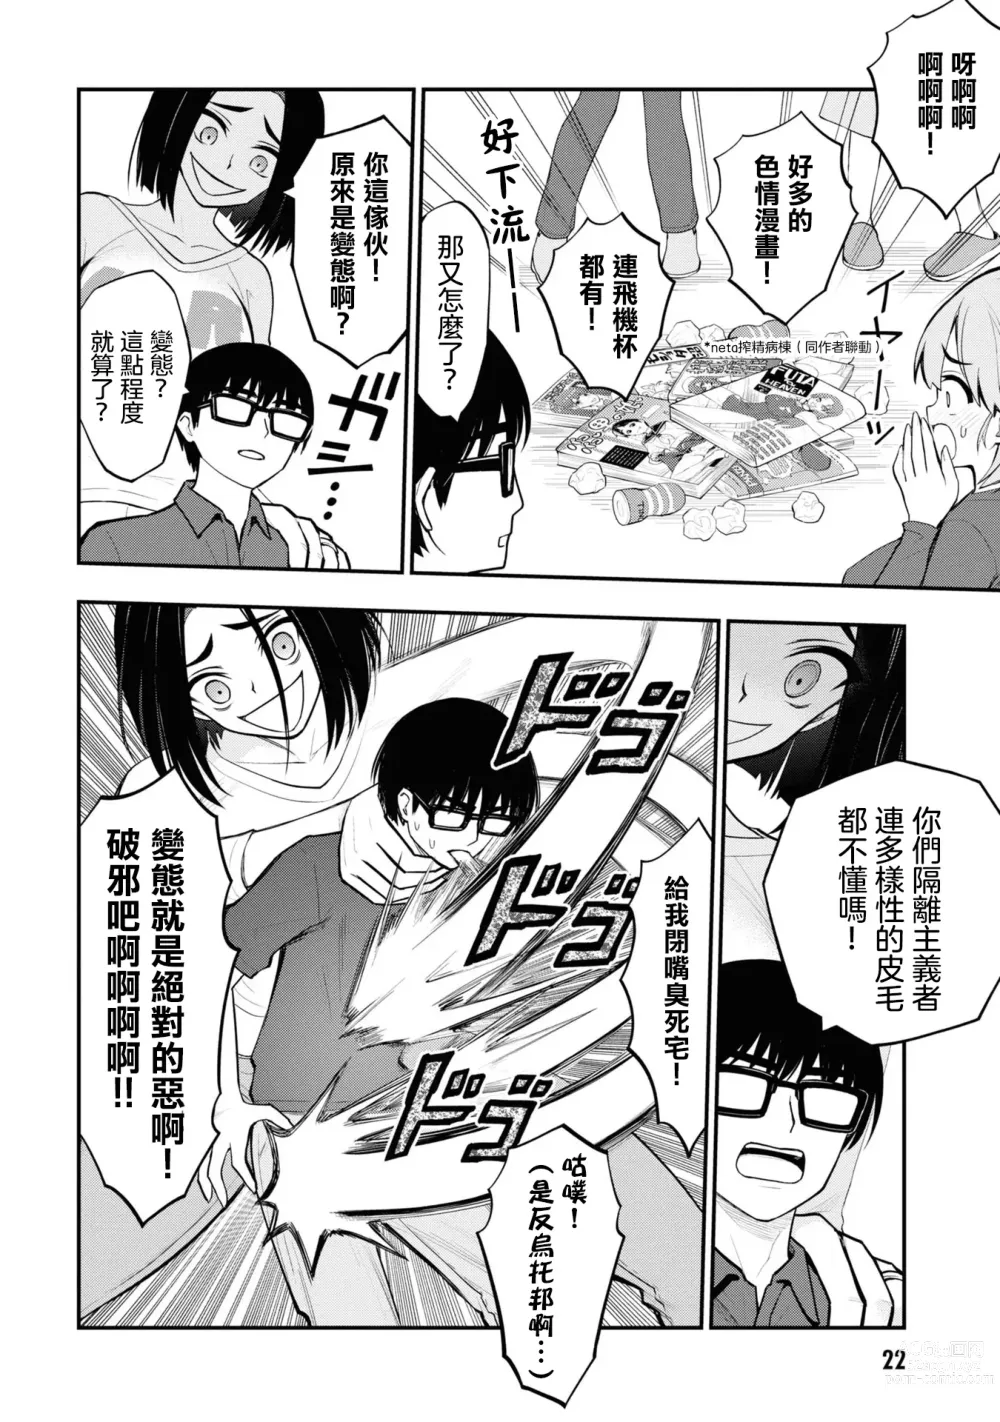 Page 26 of manga 淫獄小區 VOL.3